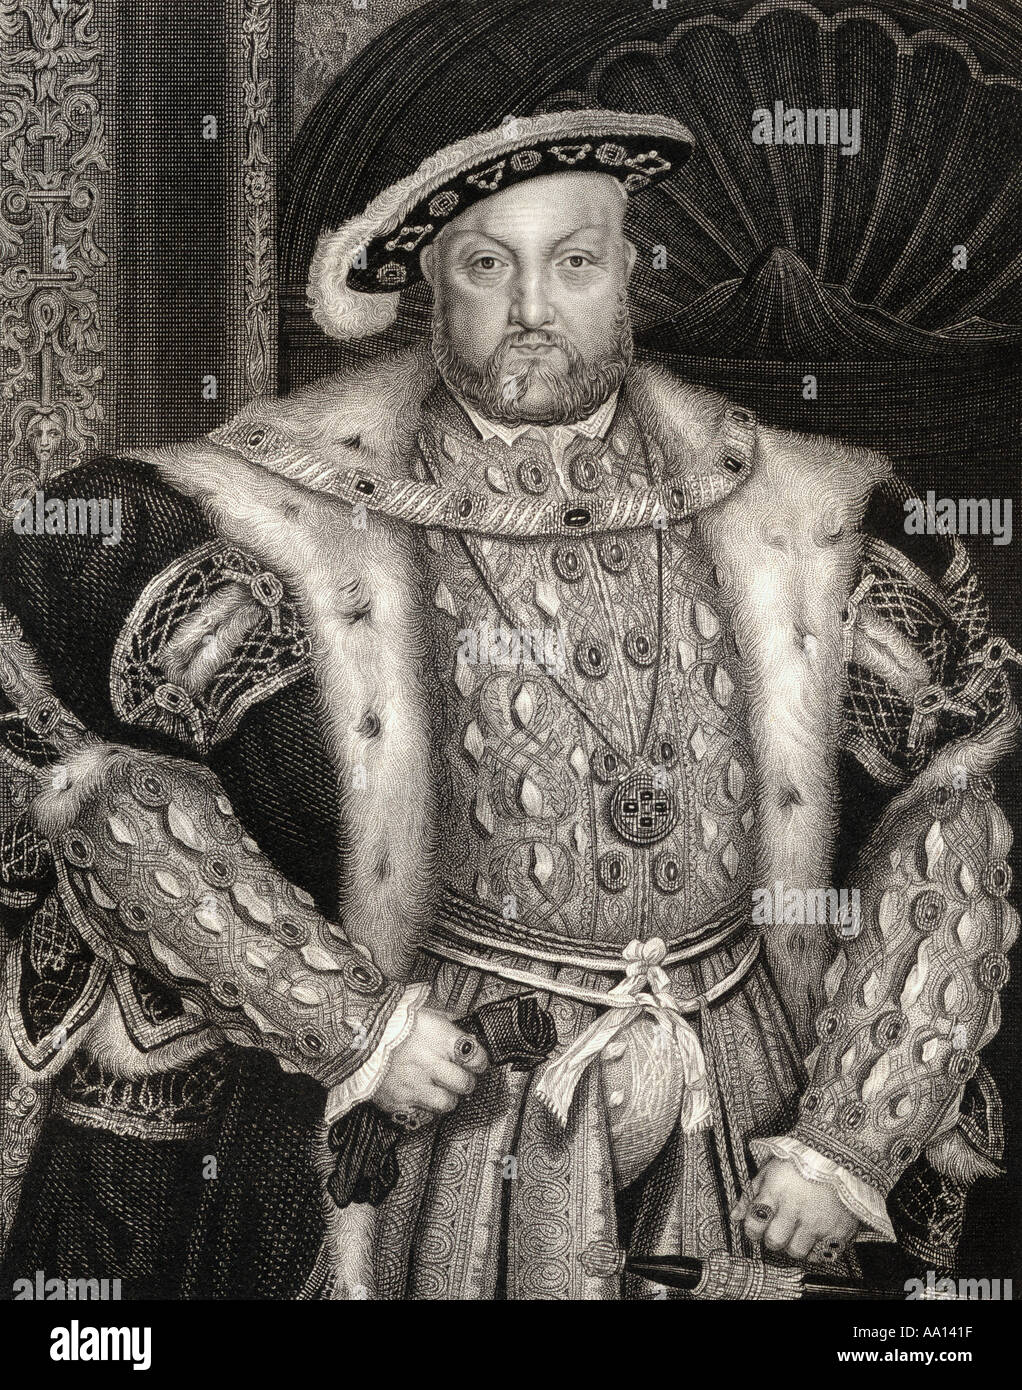 Enrique VIII, 1491 a 1547. Rey de Inglaterra Foto de stock